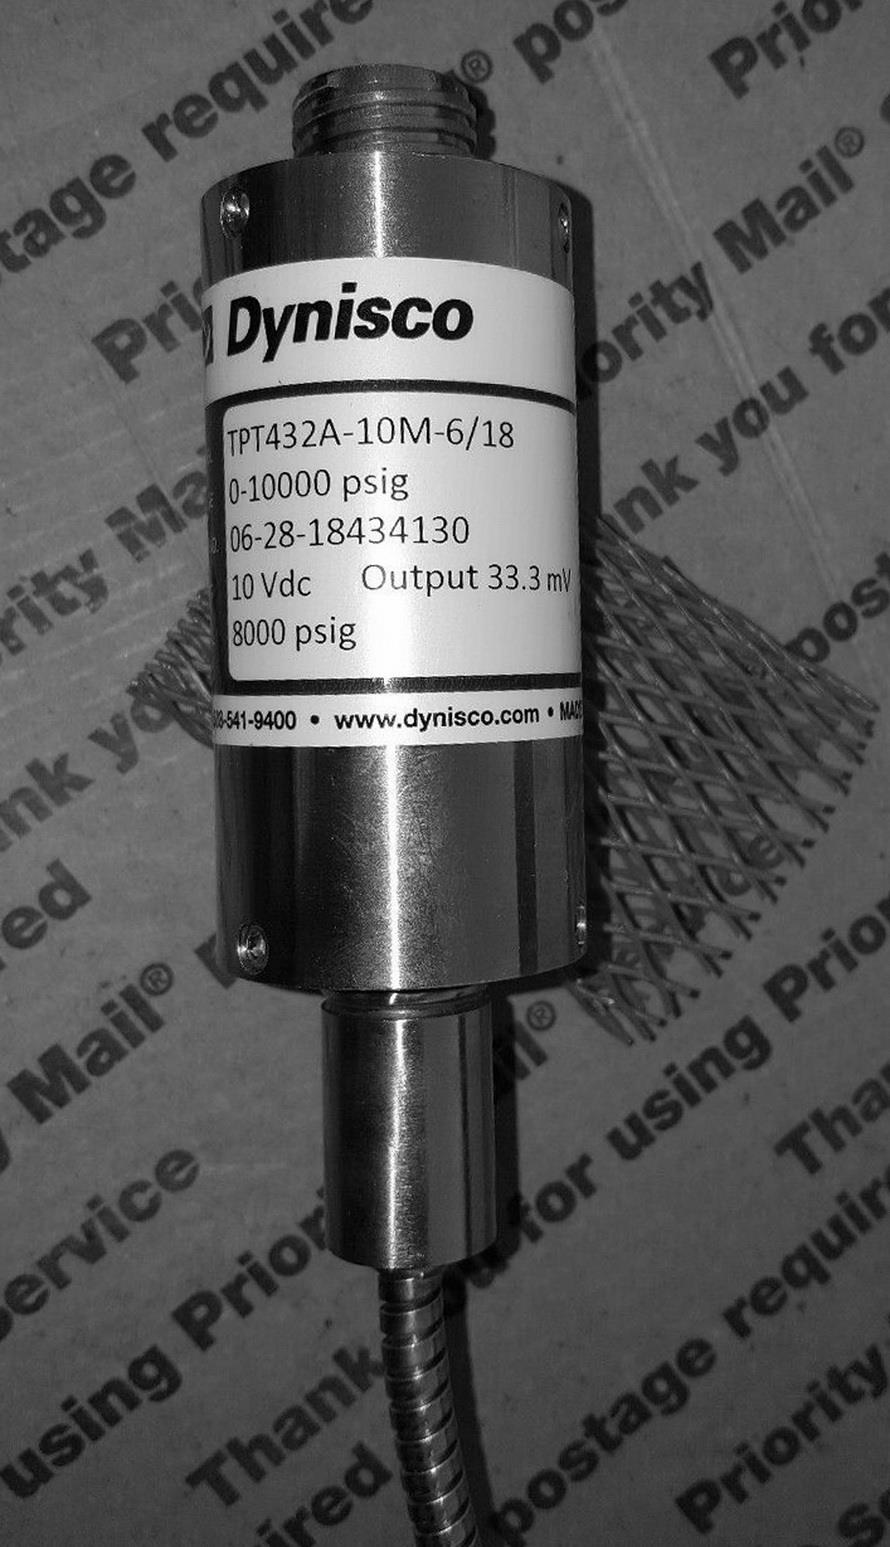 Dynisco TPT432A-10M Pressure Transmitter D,Pressure Transmitter, Pressure Sensor, Pressure Transducer, Dynisco, Transmitter, TPT462A-10M-6/18,Dynisco,Instruments and Controls/Instruments and Instrumentation